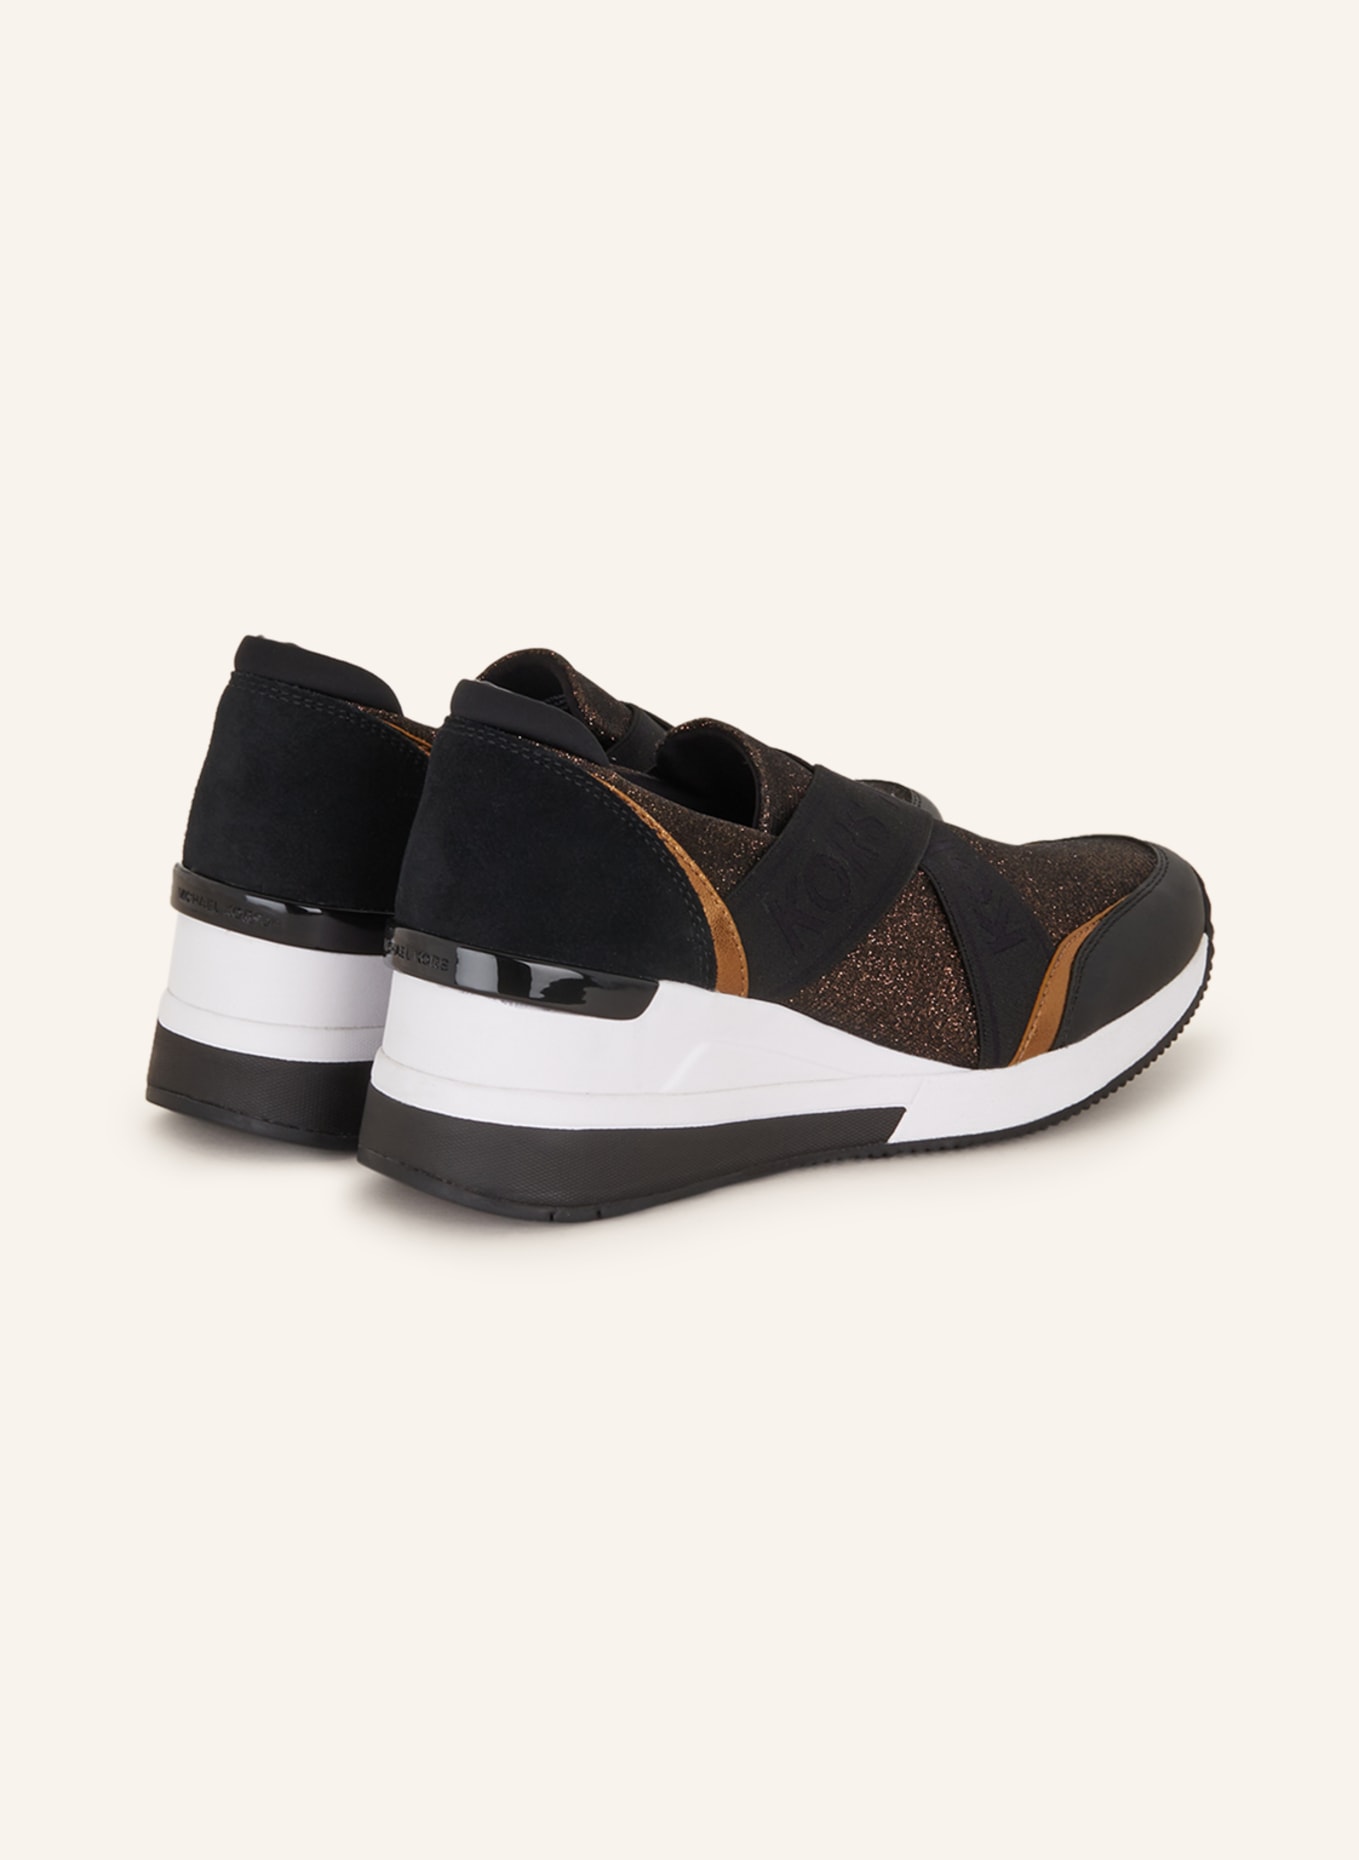 MICHAEL KORS Slip-on-Sneaker GEENA mit Glitzergarn, Farbe: 080 Black/Bronze (Bild 2)